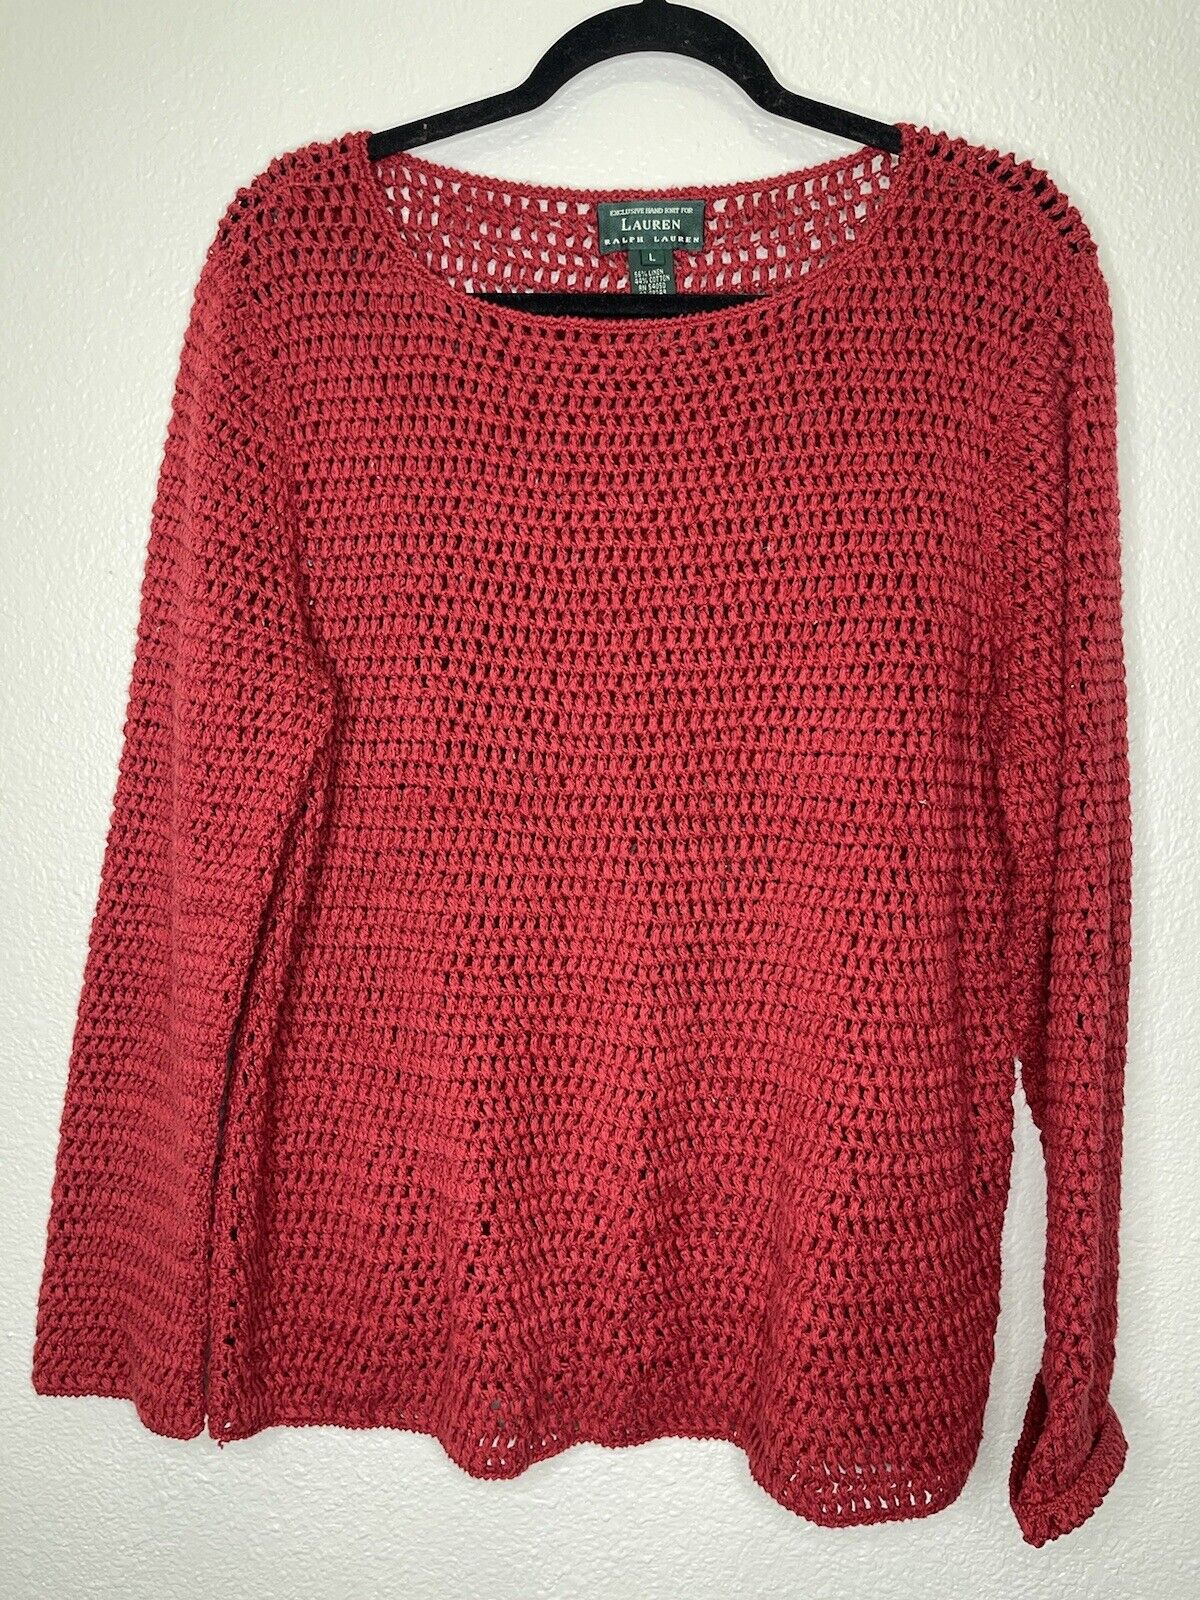 Lauren Ralph Lauren Hand-knit Sweater Size L - image 1